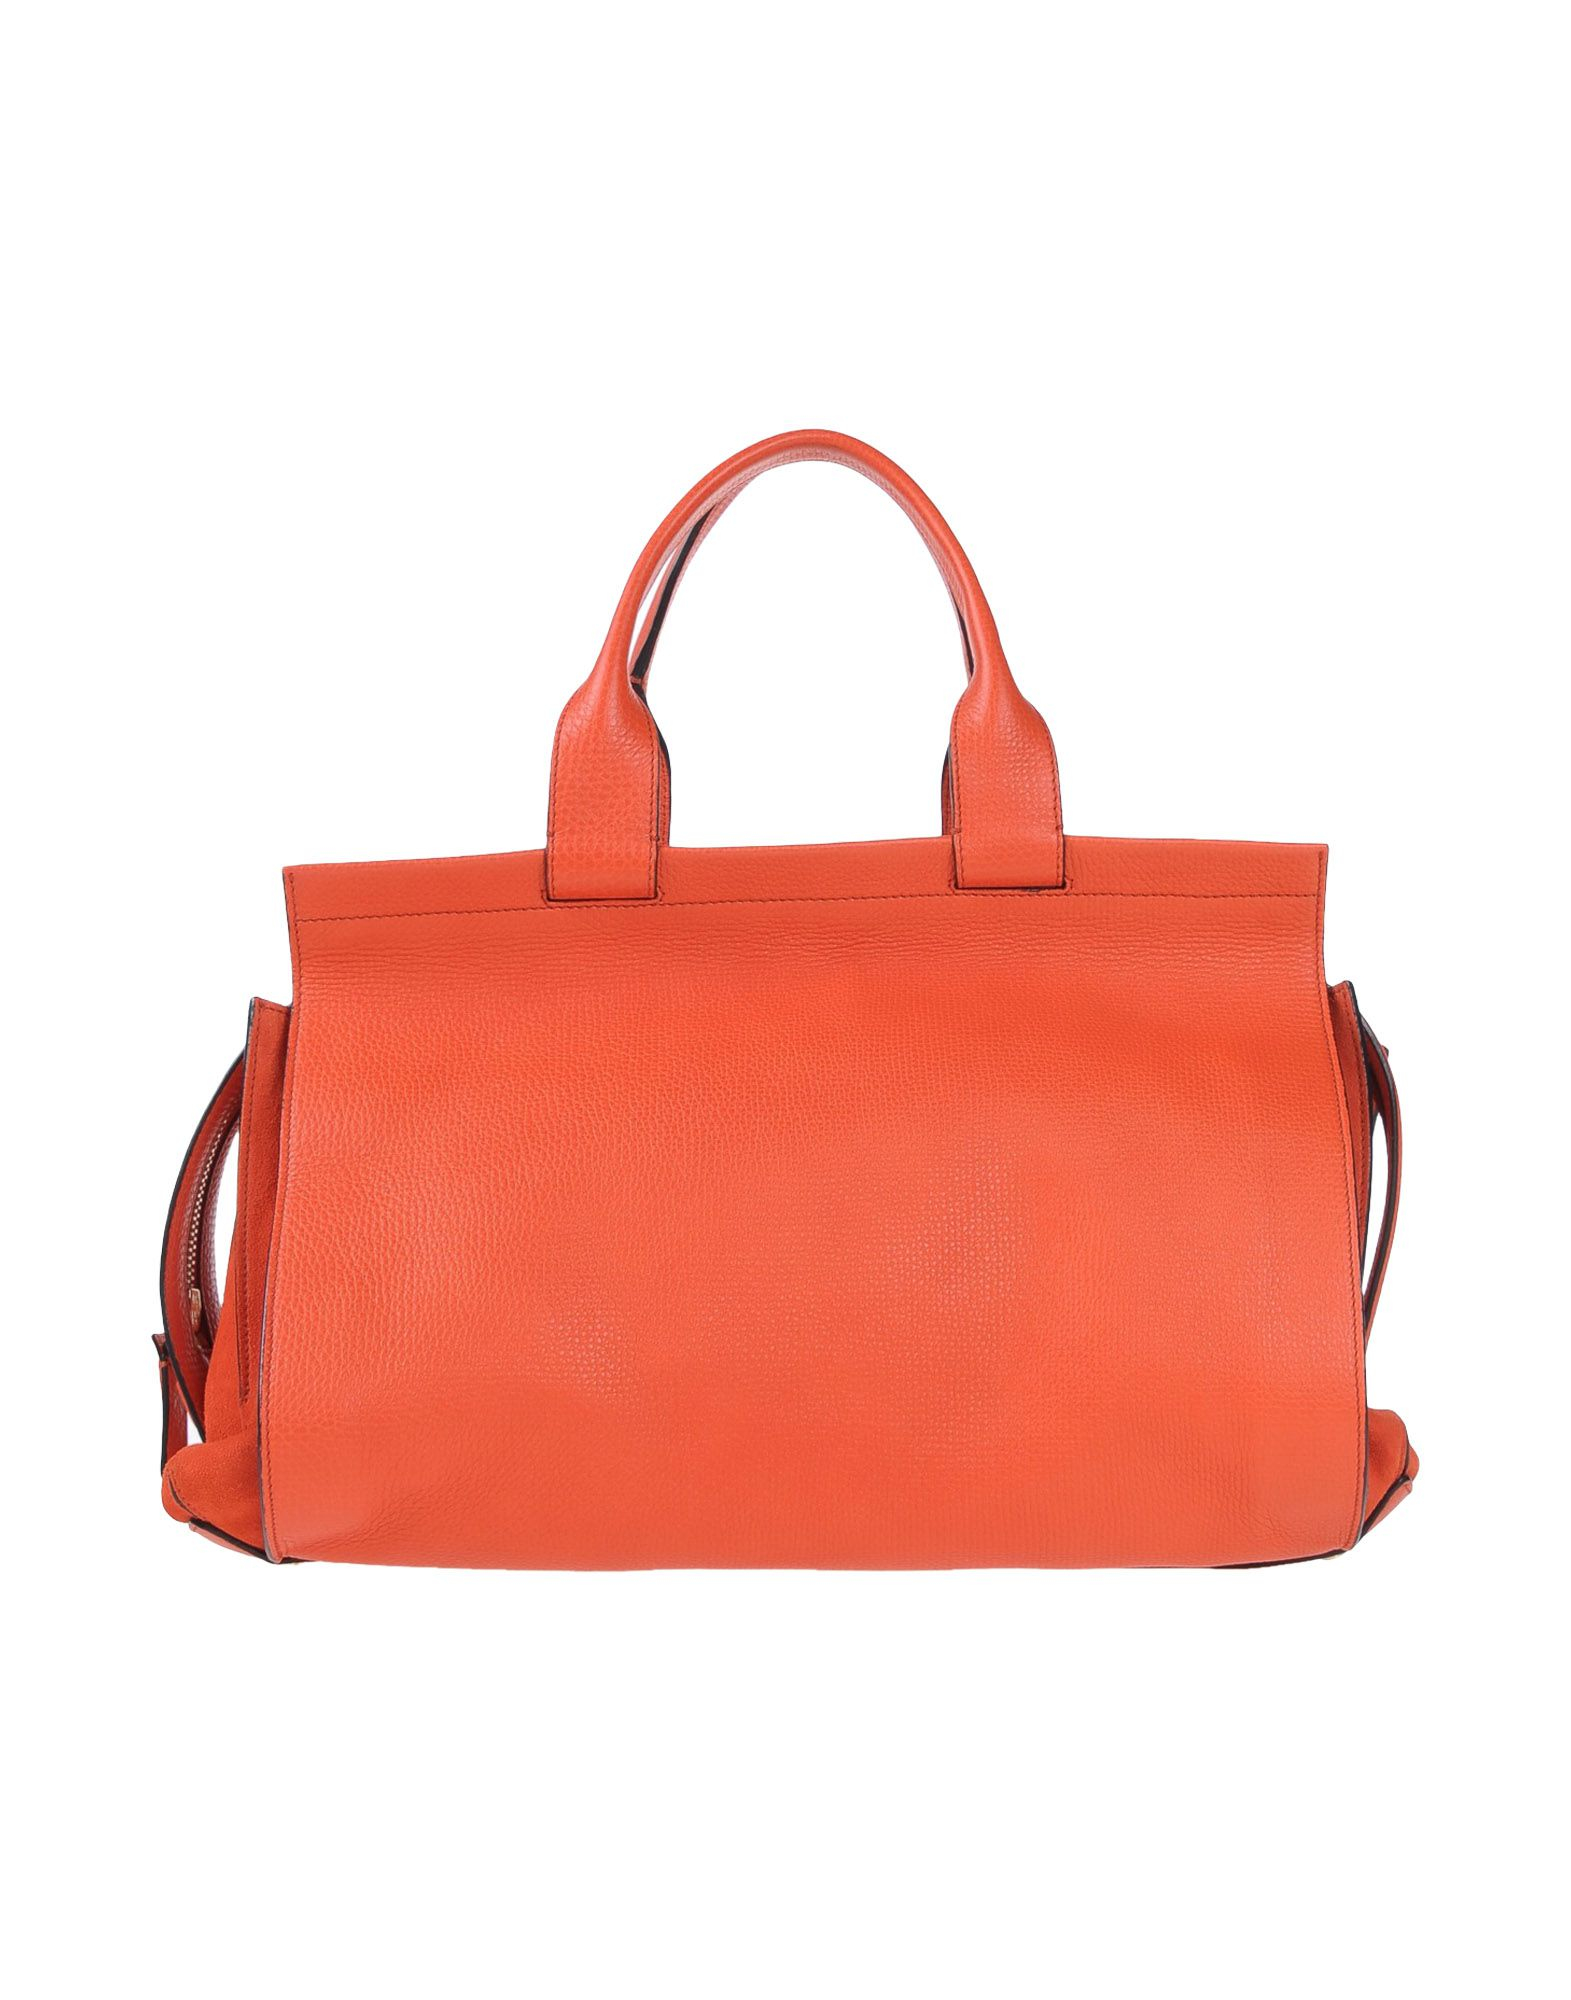 Lyst - Emilio Pucci Handbag in Pink